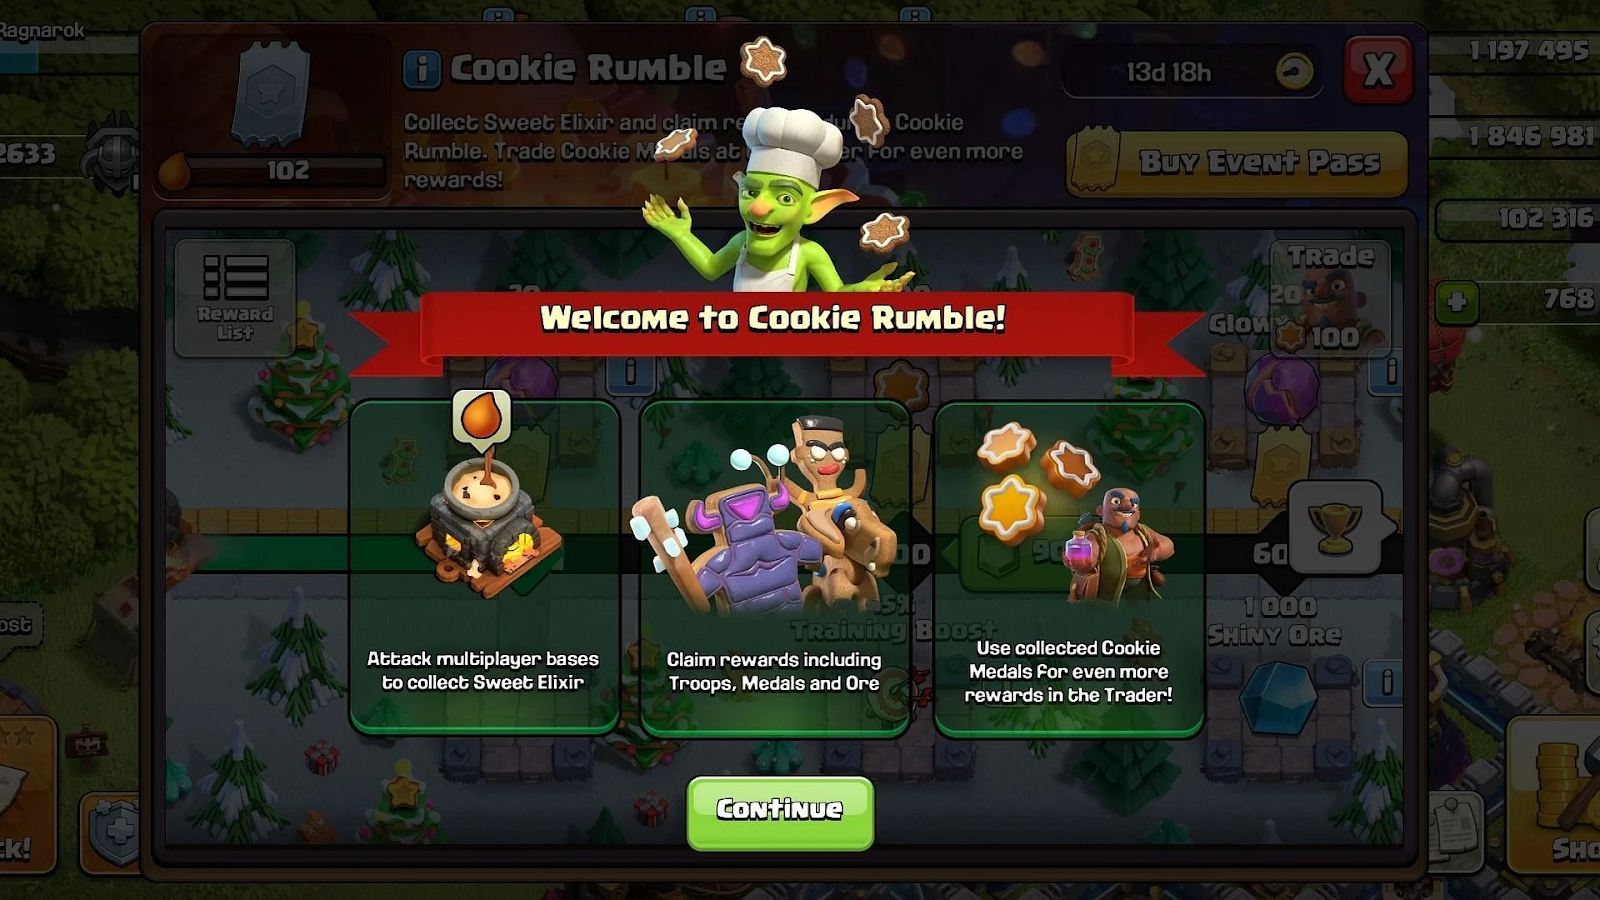 Cookie rumble